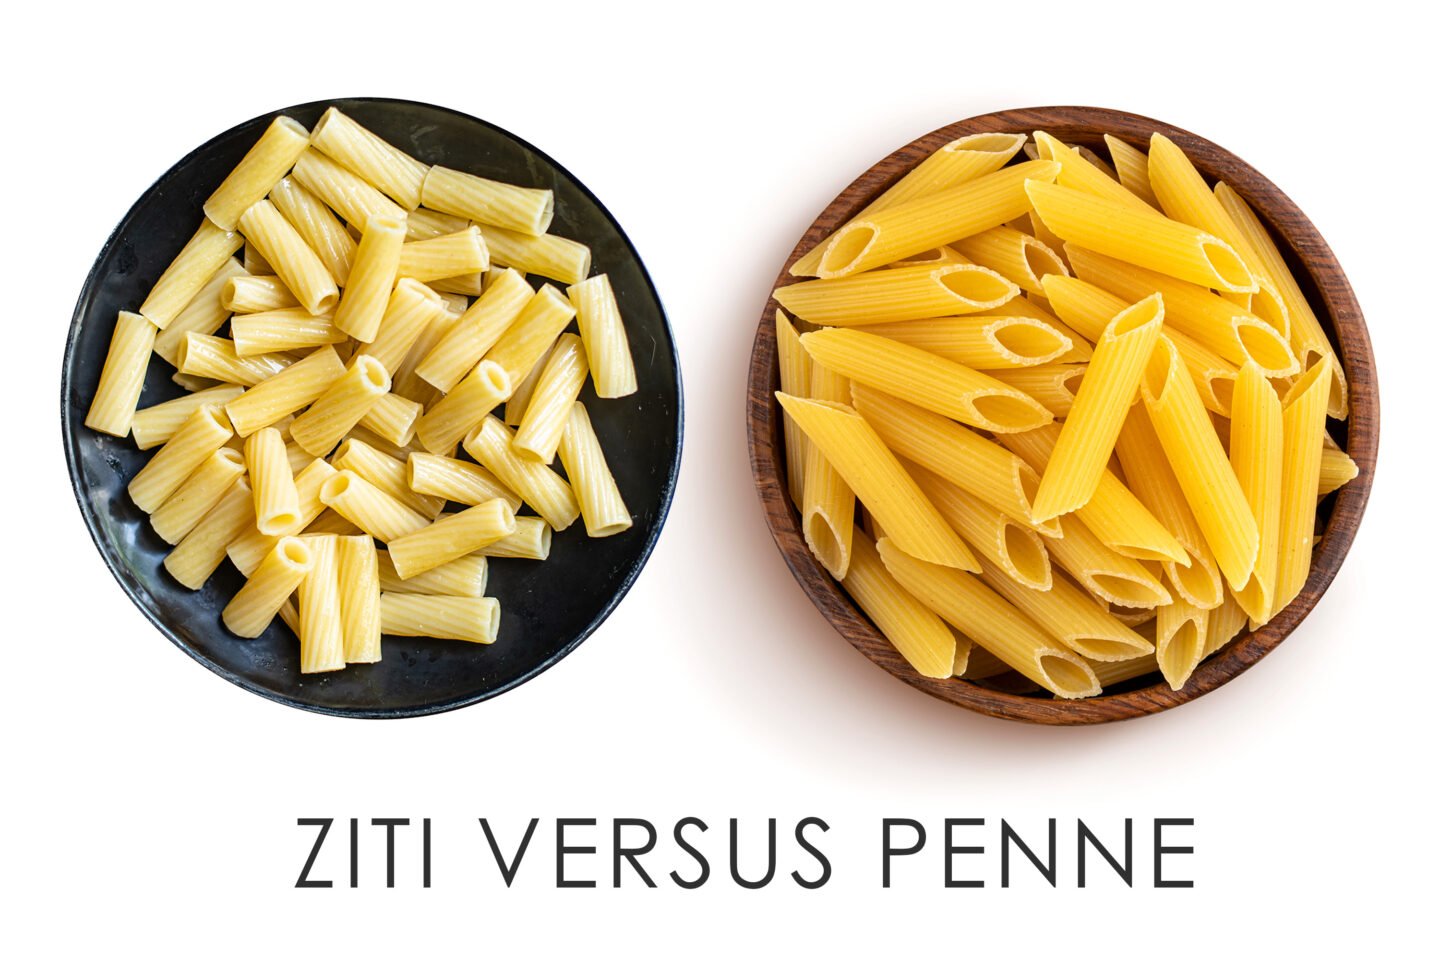 ziti versus penne comparison